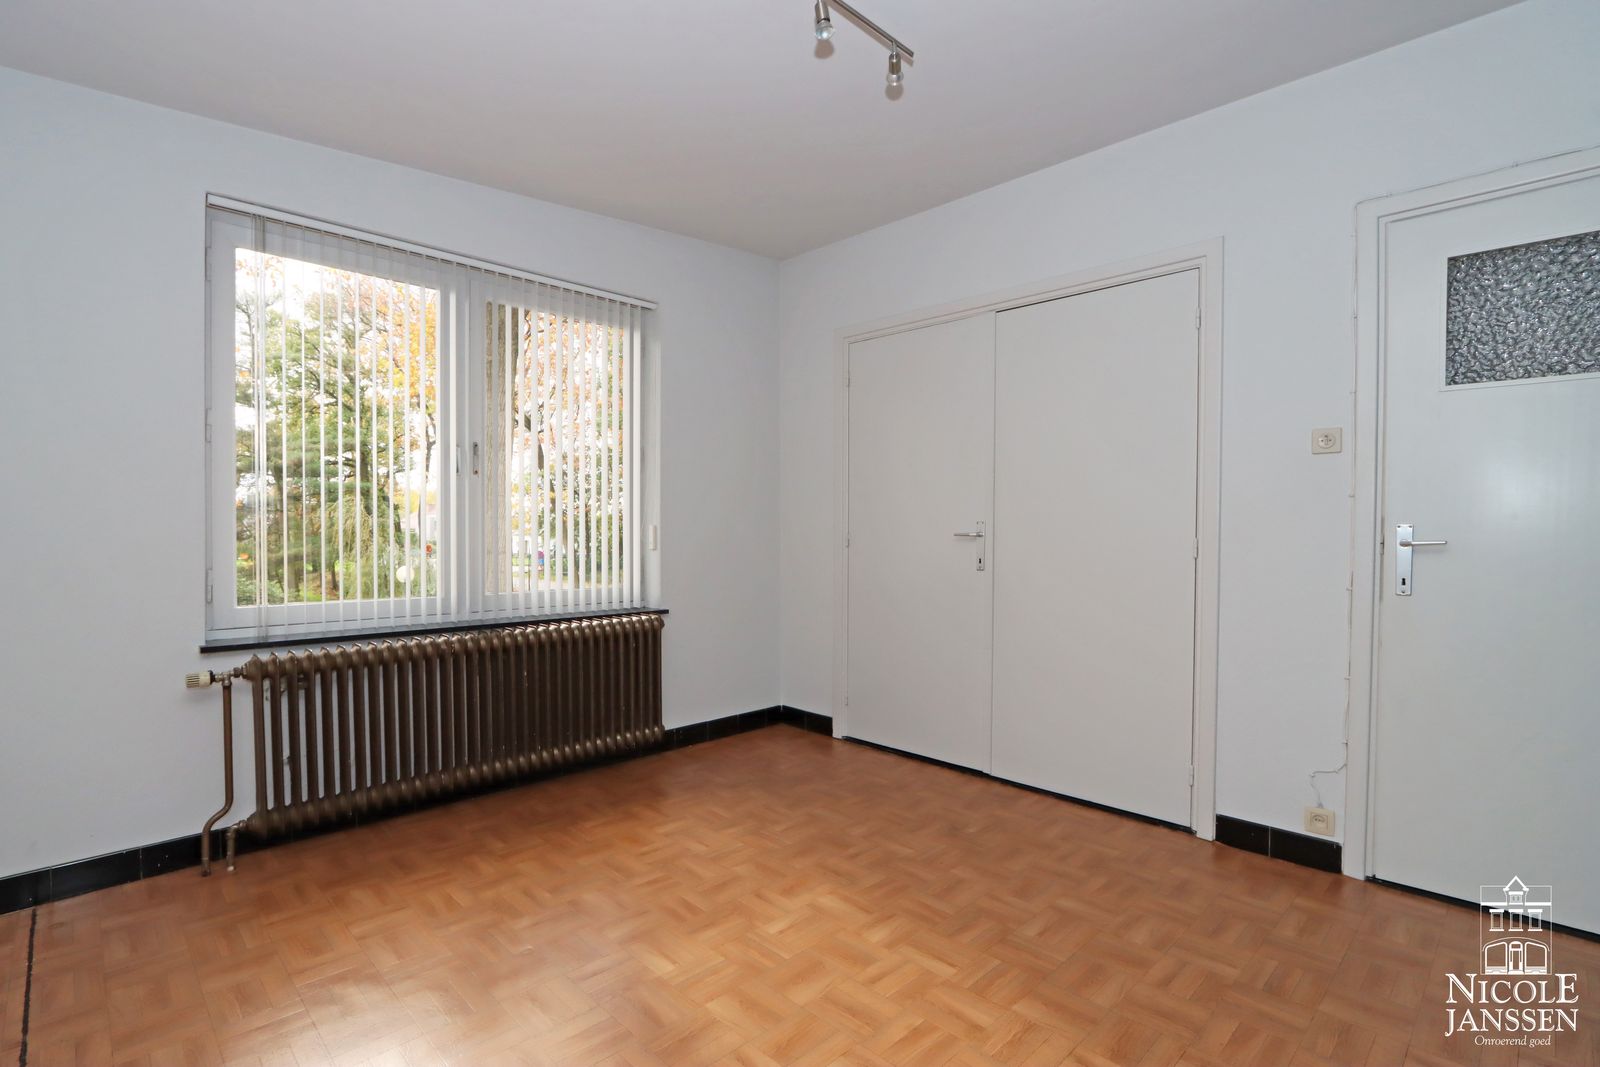 23 Nicole Janssen huis te koop Maaseik Sint-Jansberg 28 (slaapkamer 1)_bewerkt-1.jpg